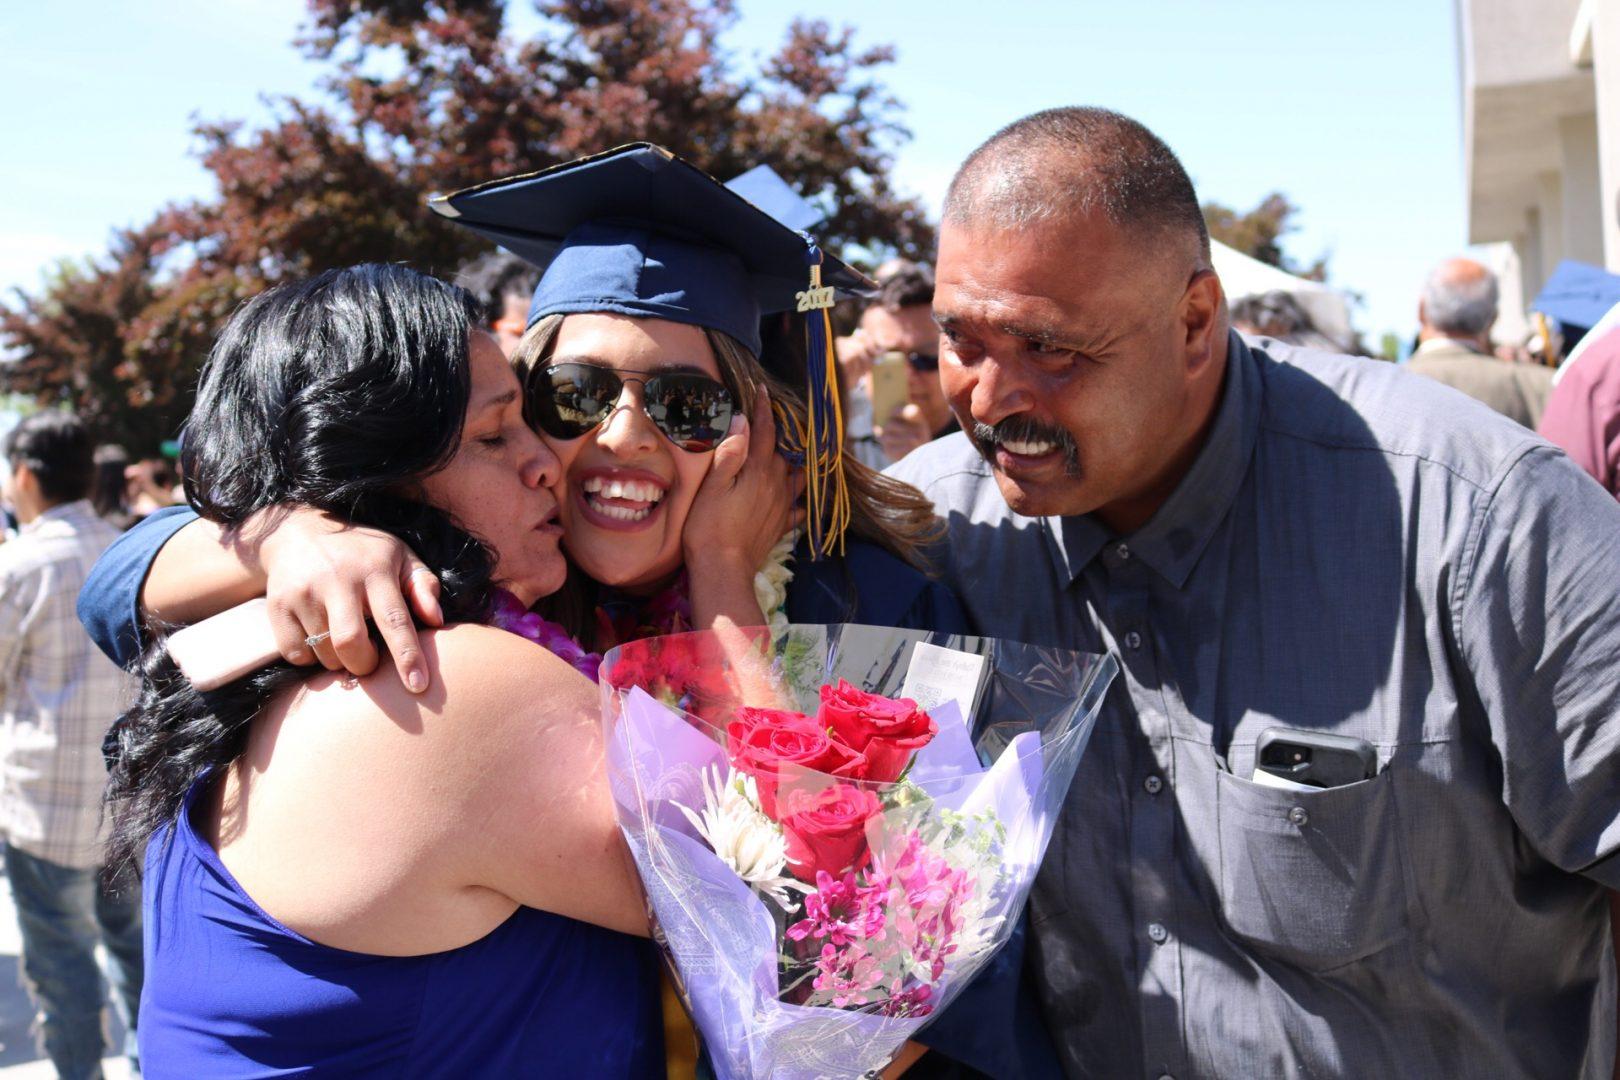 Camerina+Morales+celebrates+her+graduation+with+her+parents.+%28Courtesy+Camerina+Morales%29